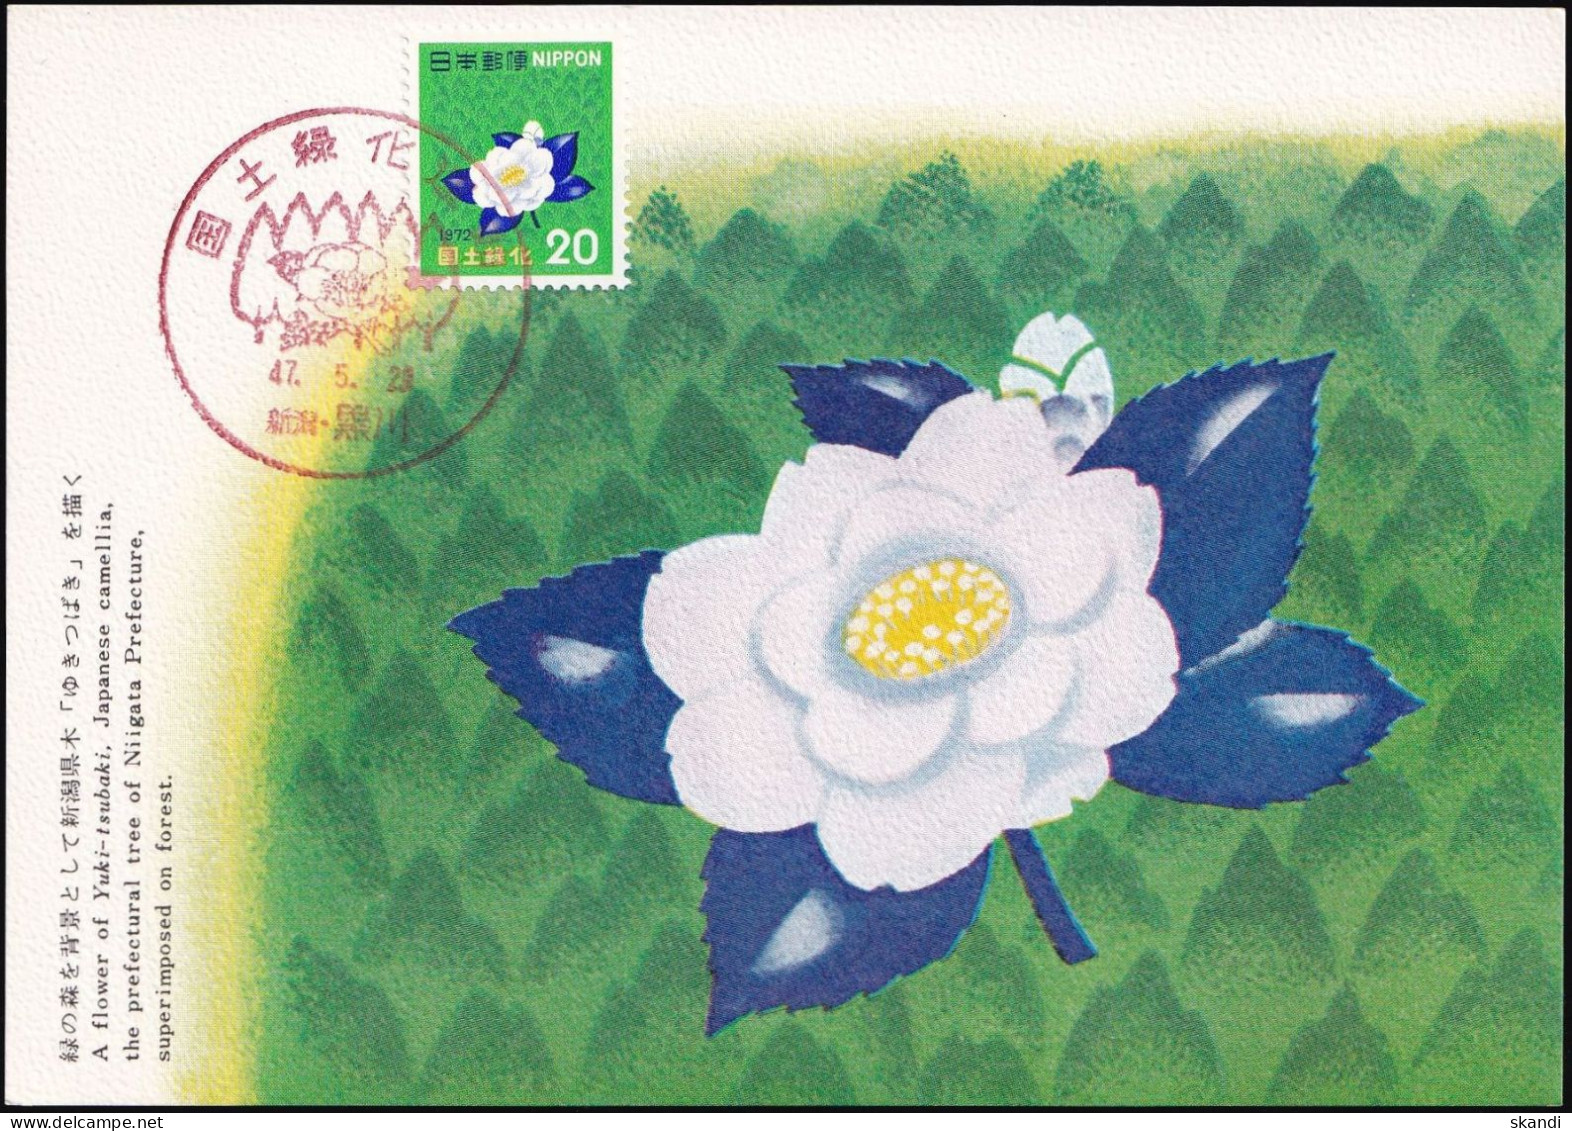 JAPAN 1972 Mi-Nr. 1151 Maximumkarte MK/MC No. 202 - Maximumkarten